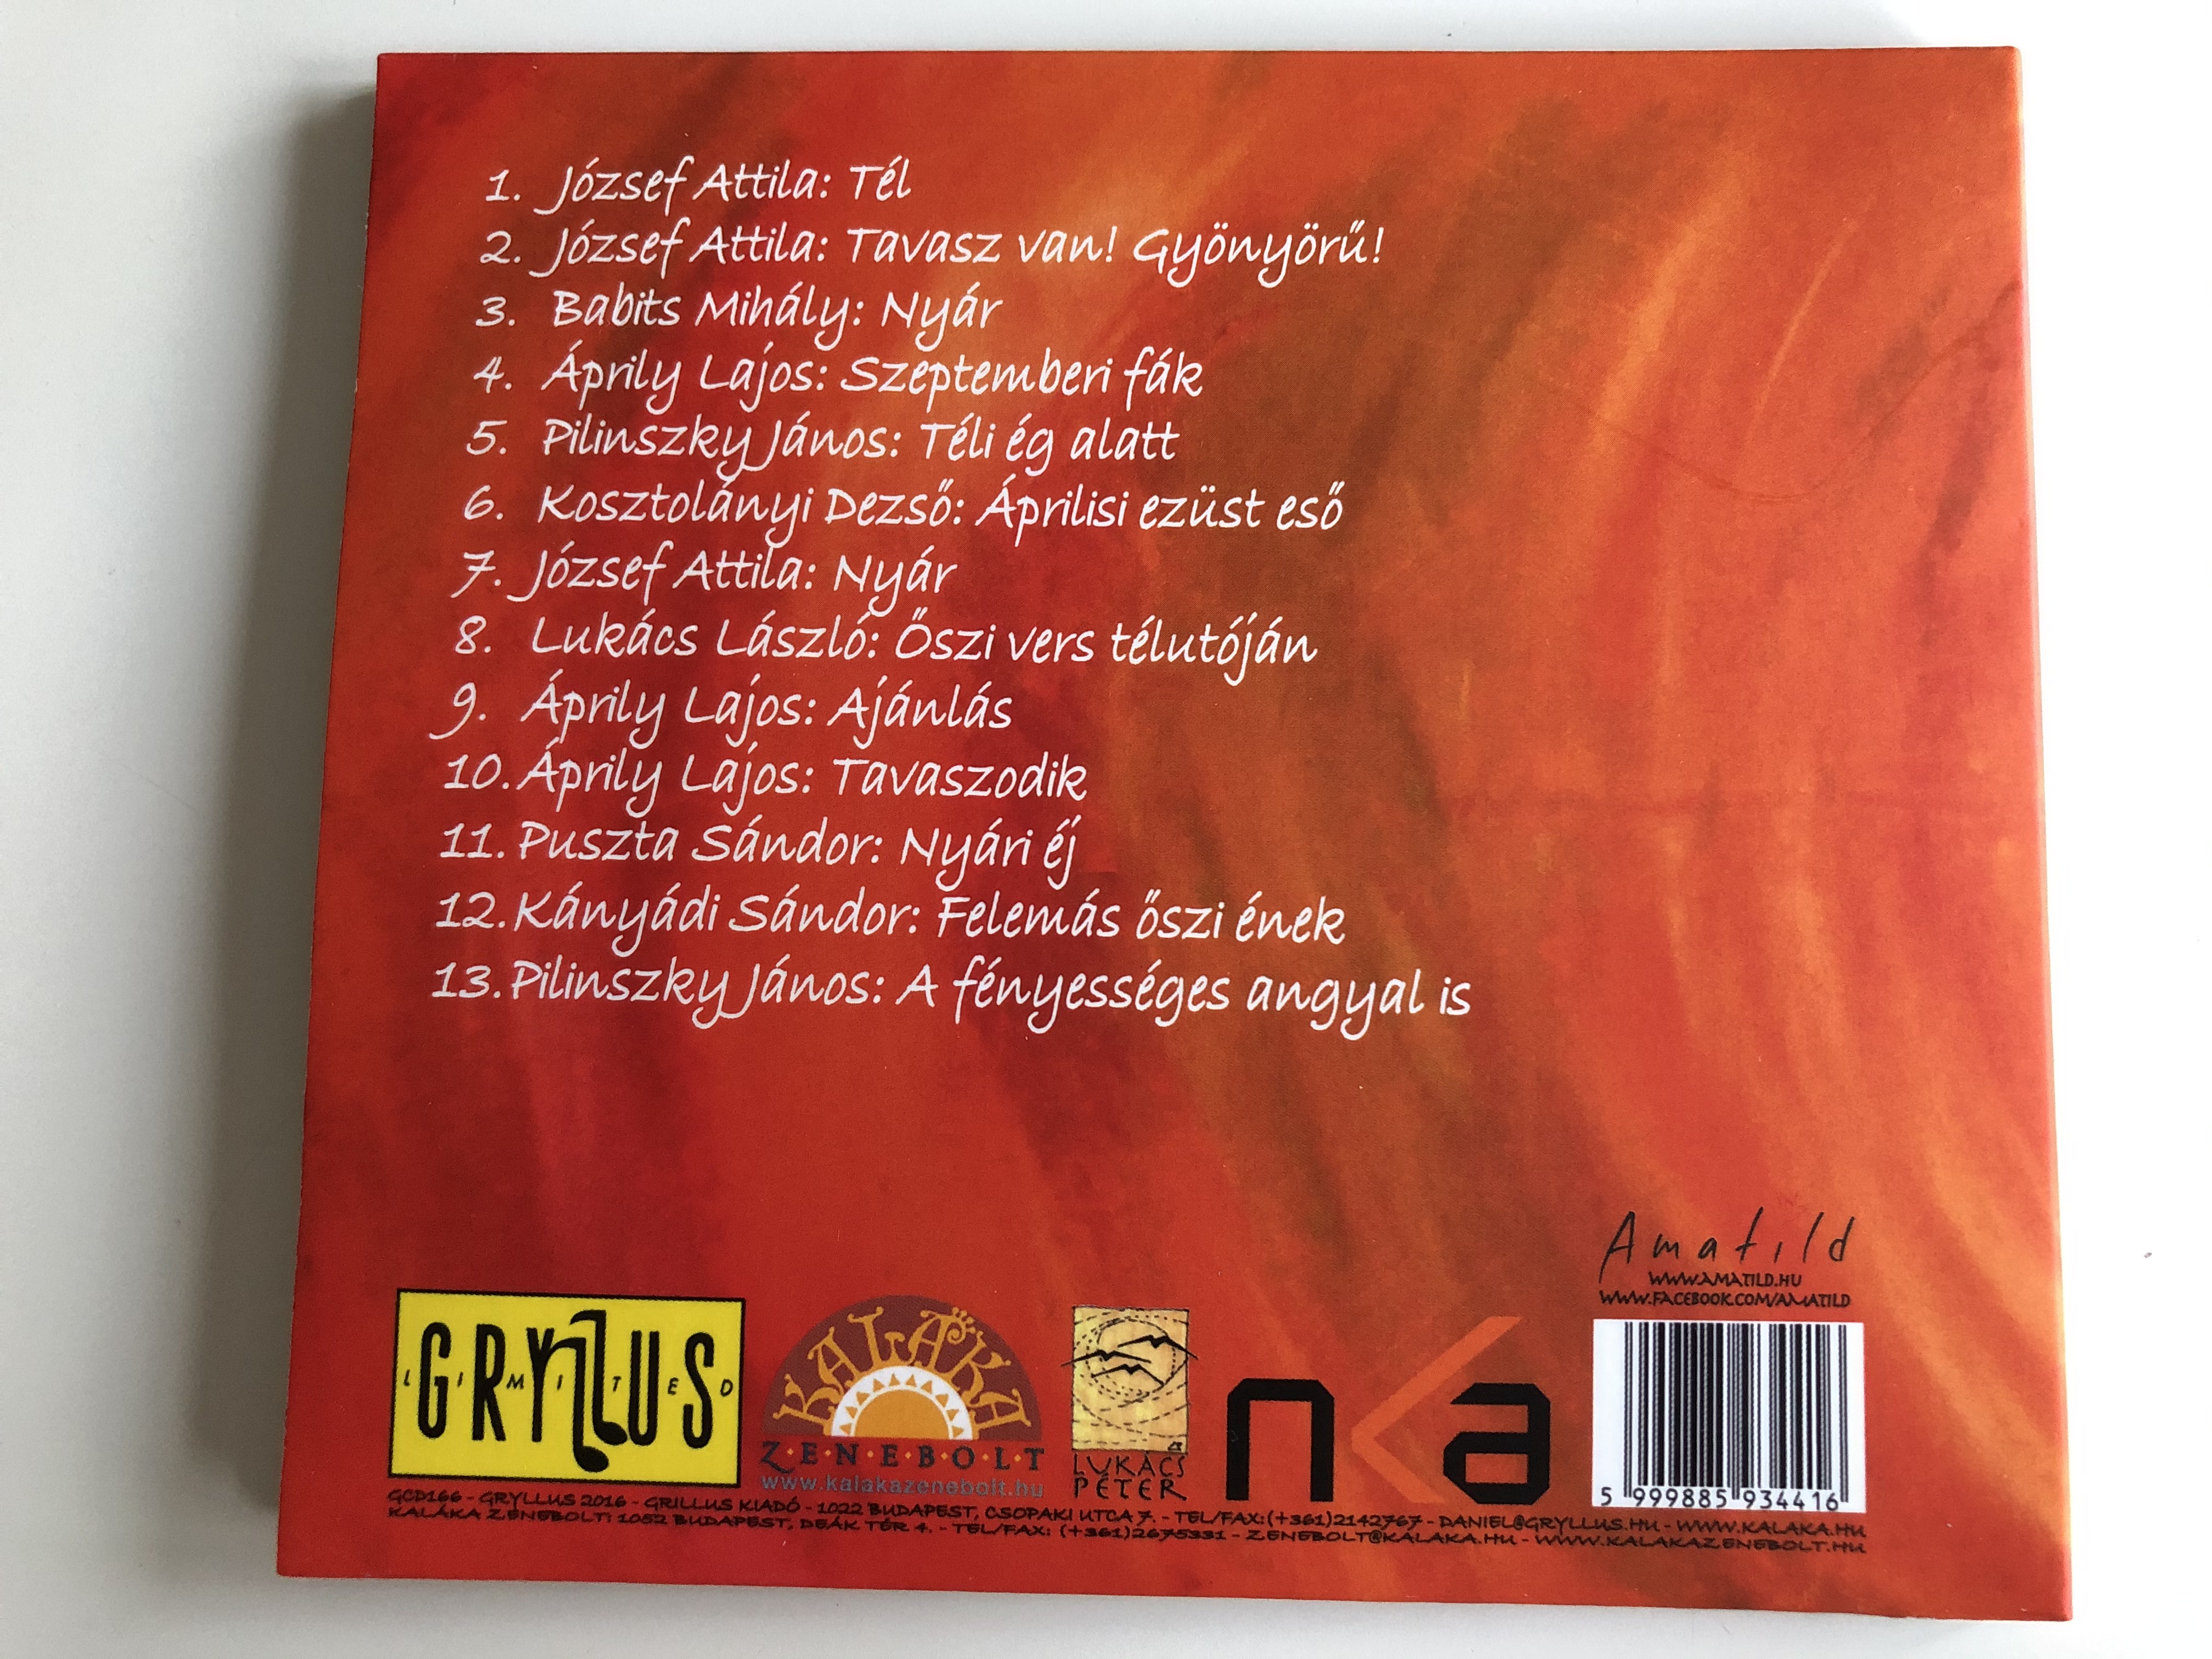 amatild-esik-a-nap-dalok-magyar-koltok-verseibol-gryllus-audio-cd-2016-gcd-166-12-.jpg